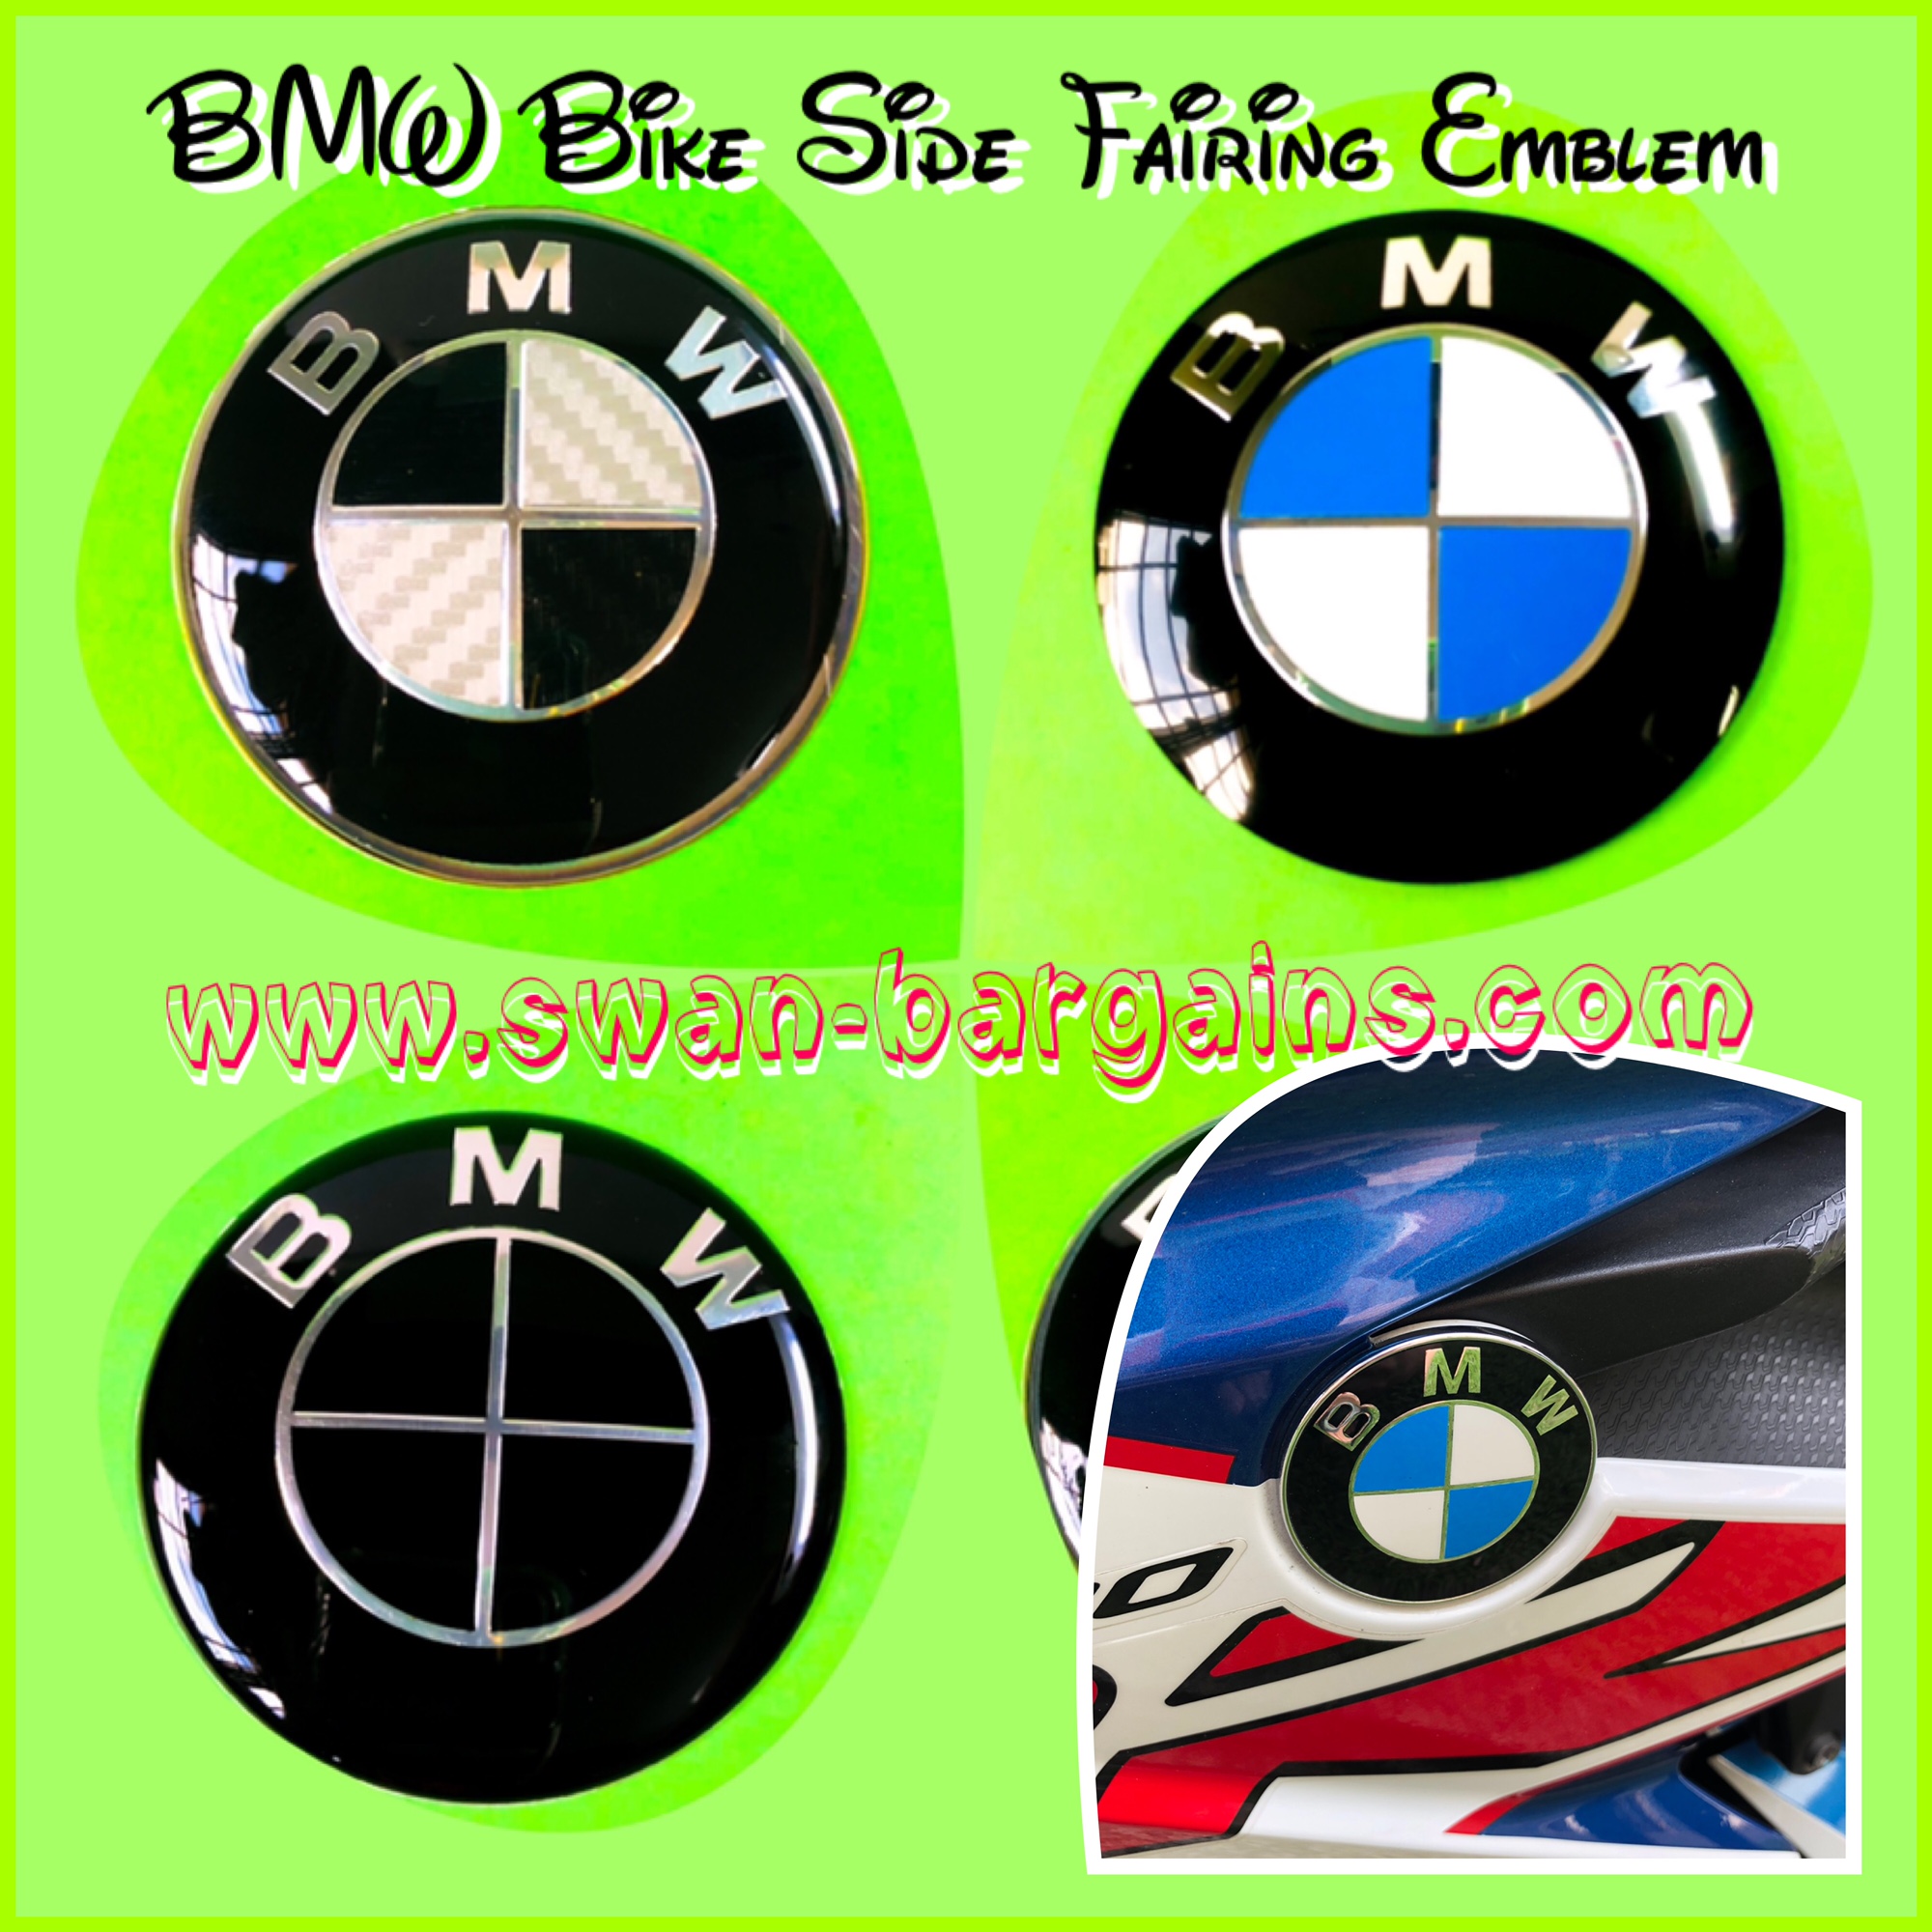 BMW Bike Side Fairing Emblem Singapore